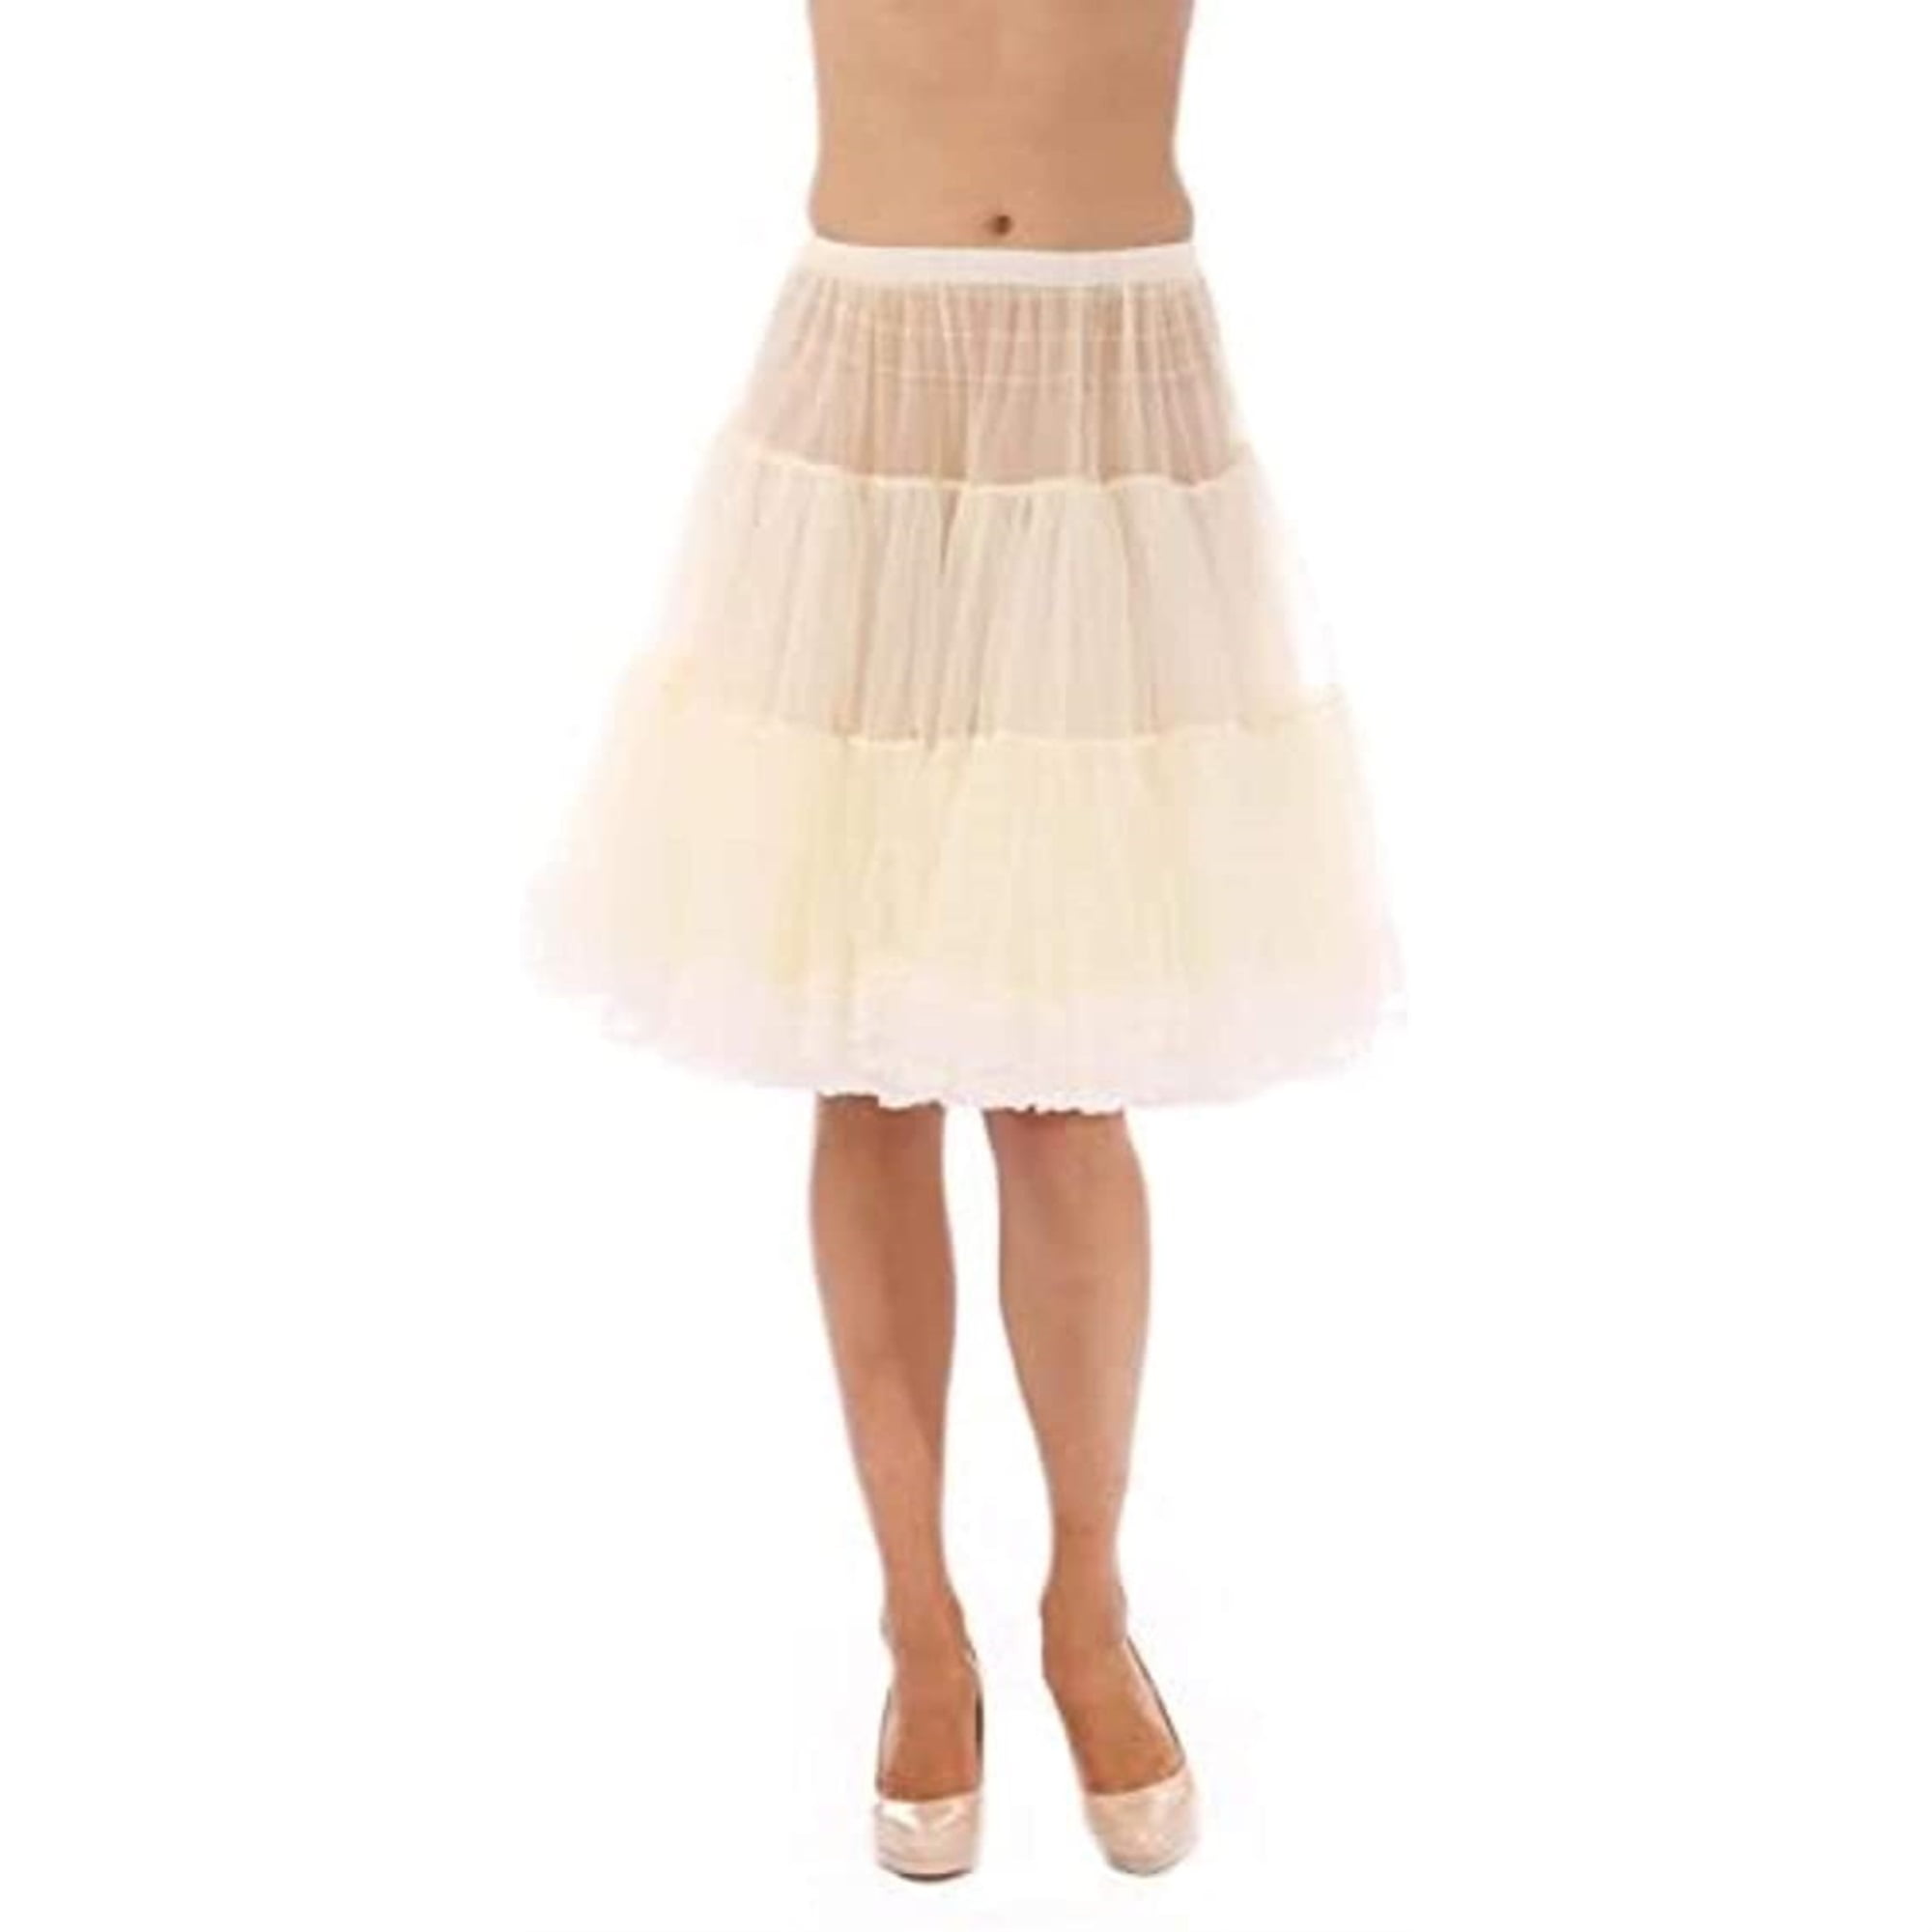 Malco Modes Zooey Luxury Chiffon Adult Petticoat Slip Adjustable 